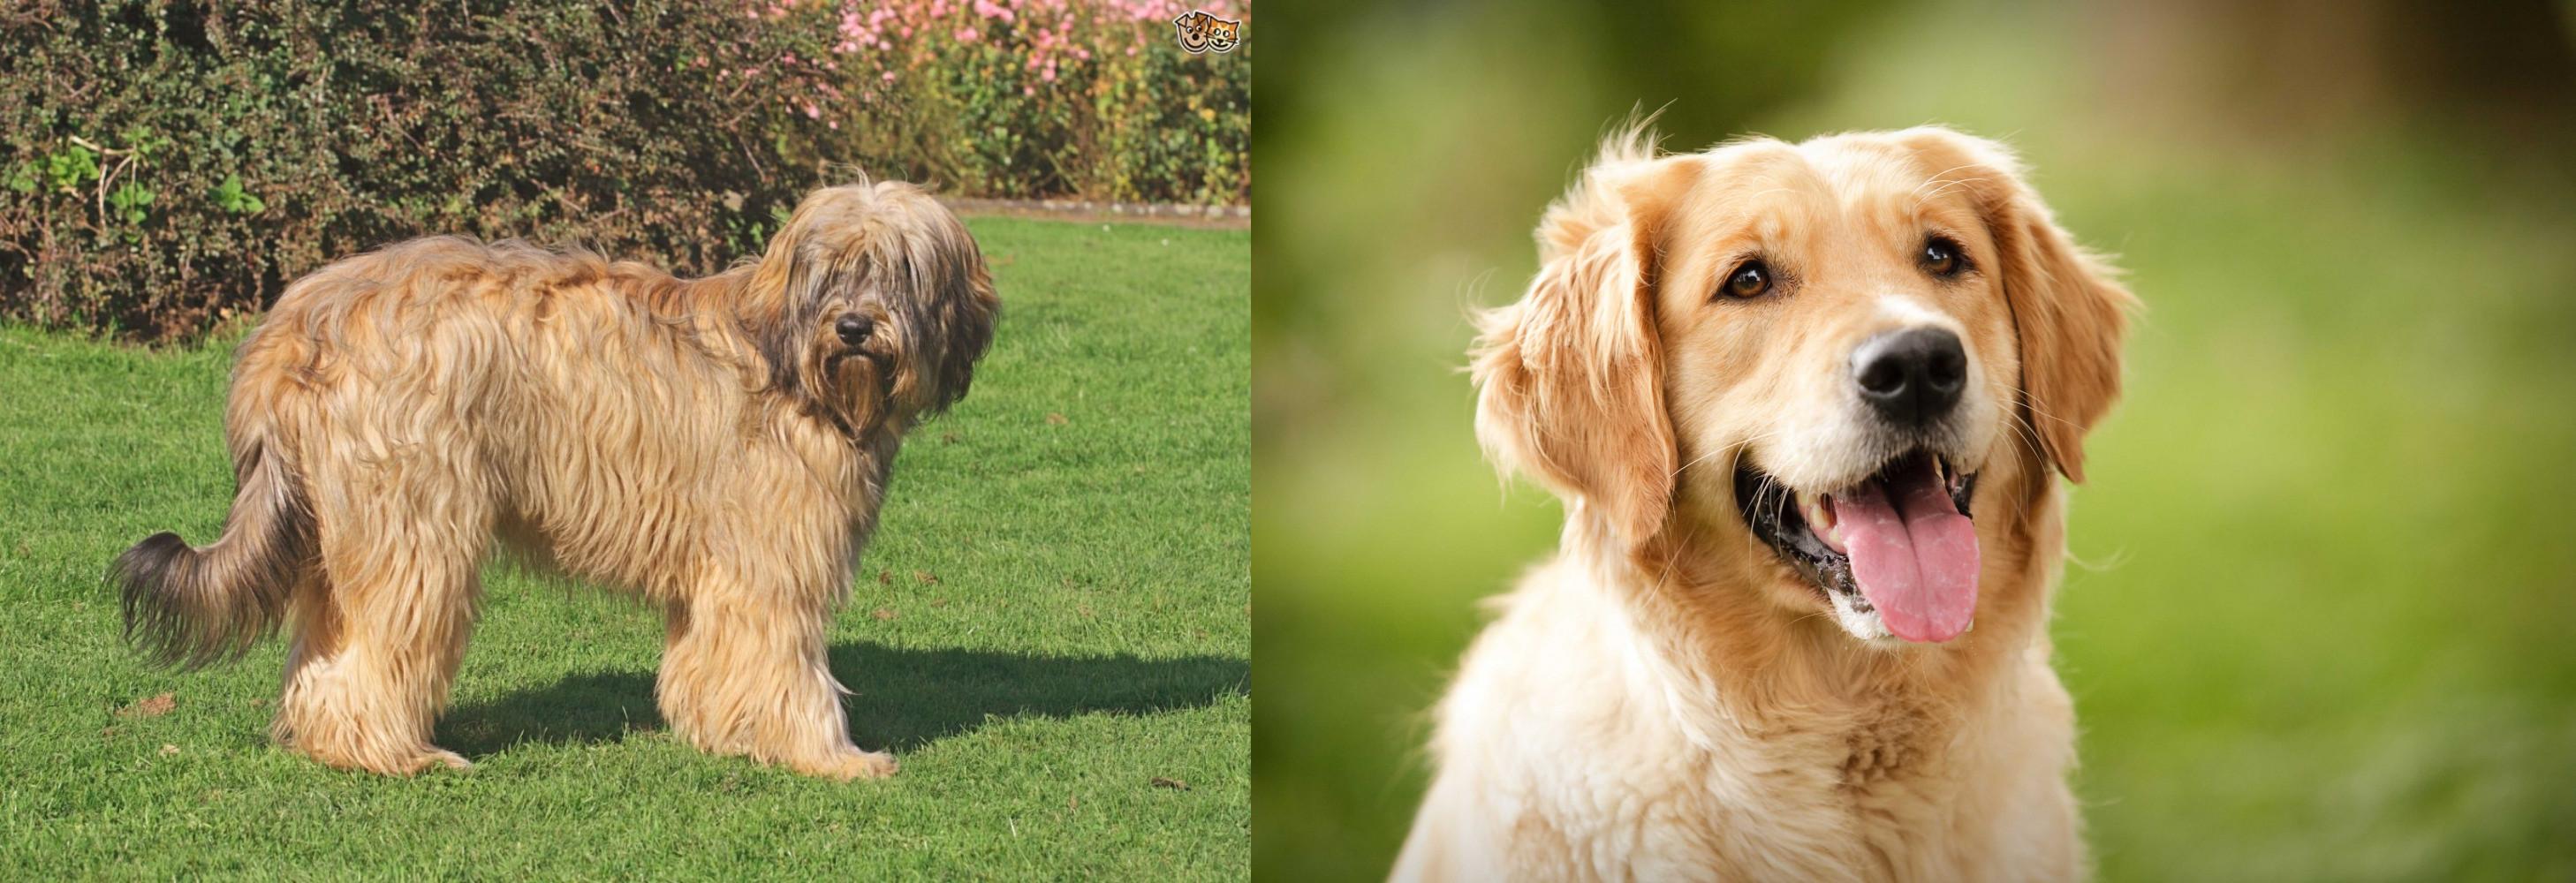 Catalan Sheepdog Vs Golden Retriever Breed Comparison